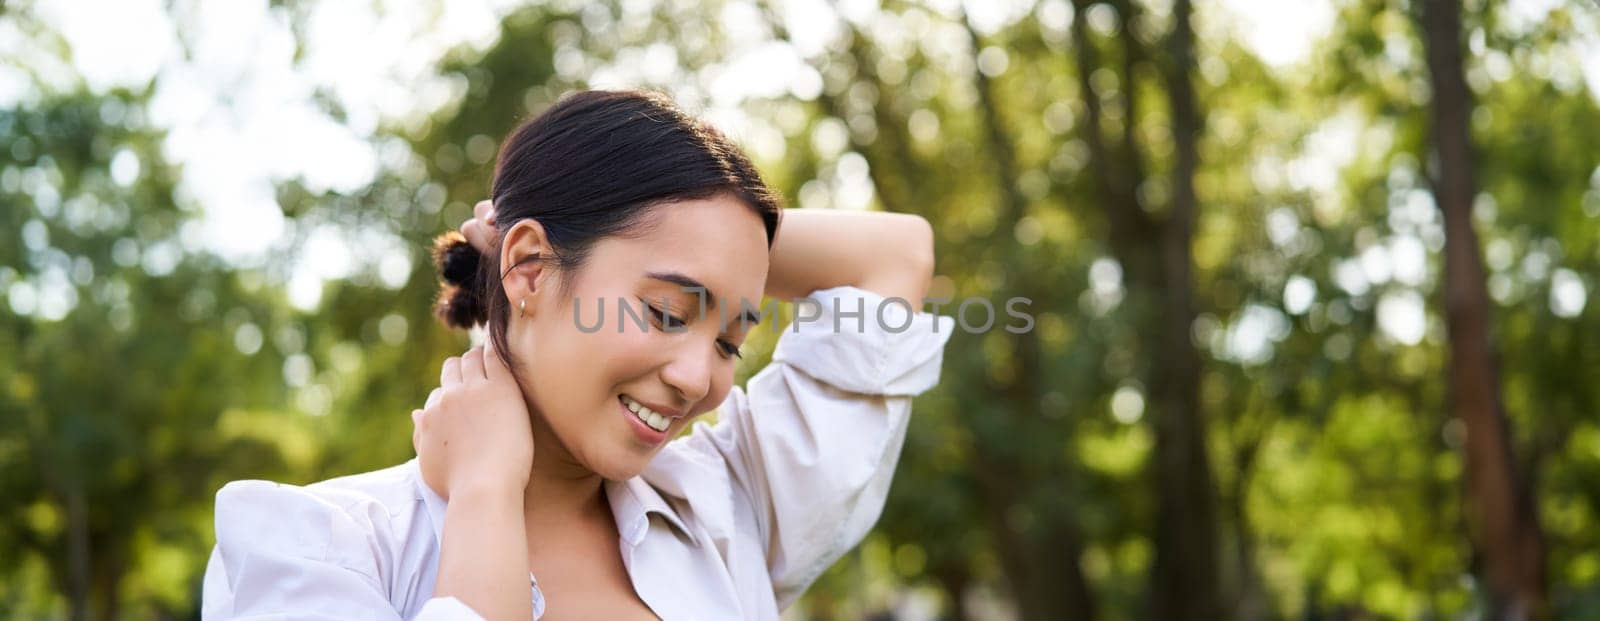 Beautiful young woman tying her hair while walking in park, smiling romantic, enjoying warm day.